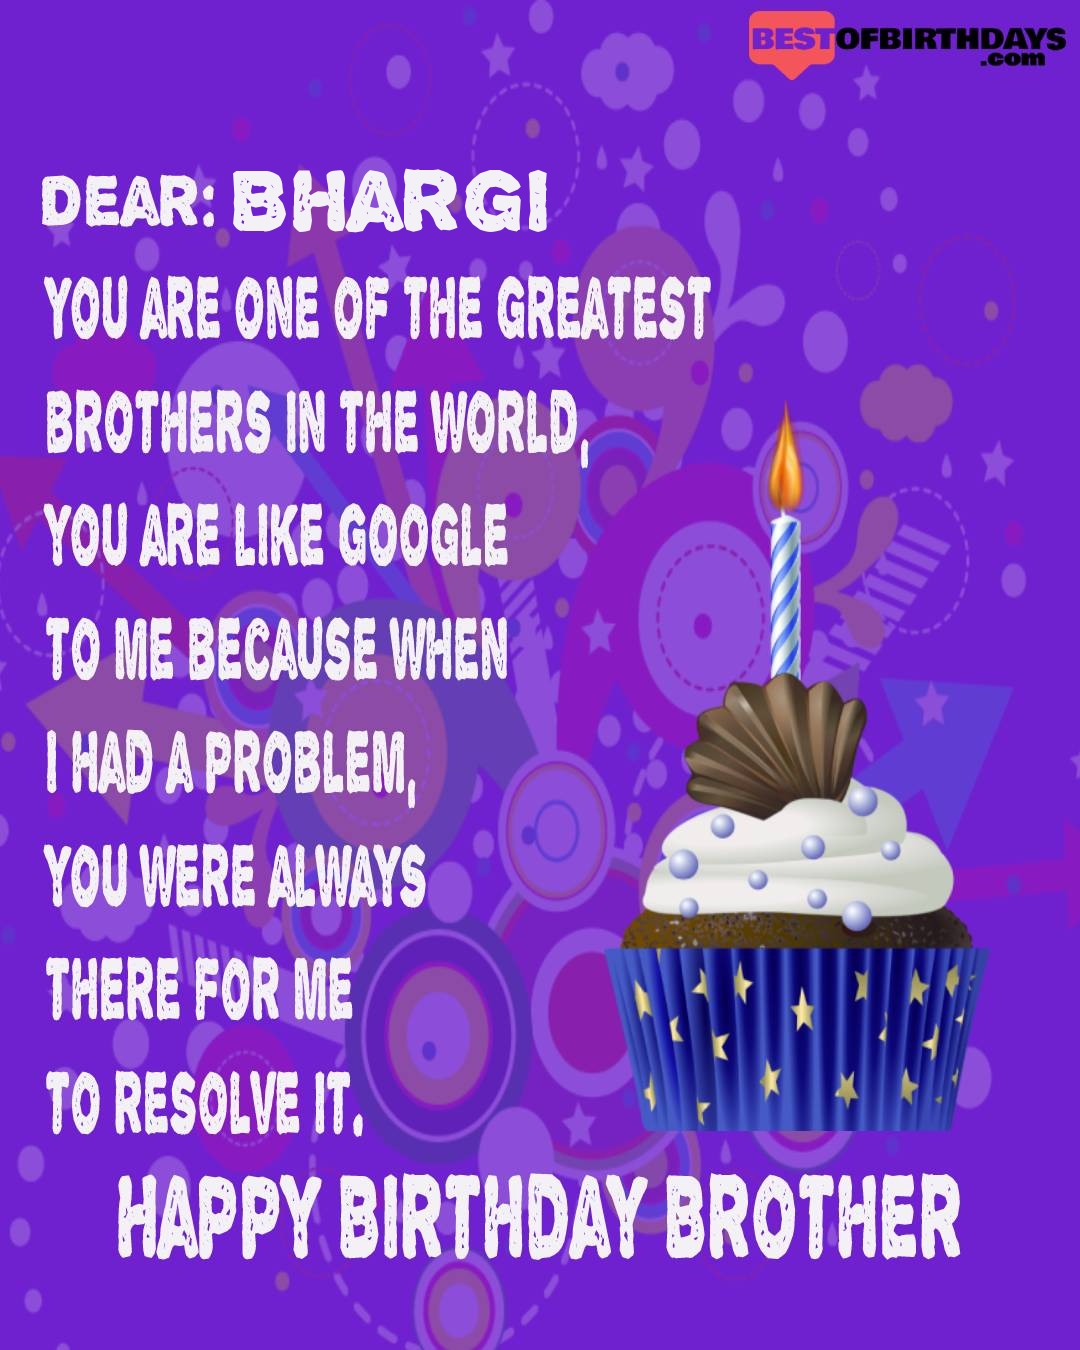 Happy birthday bhargi bhai brother bro